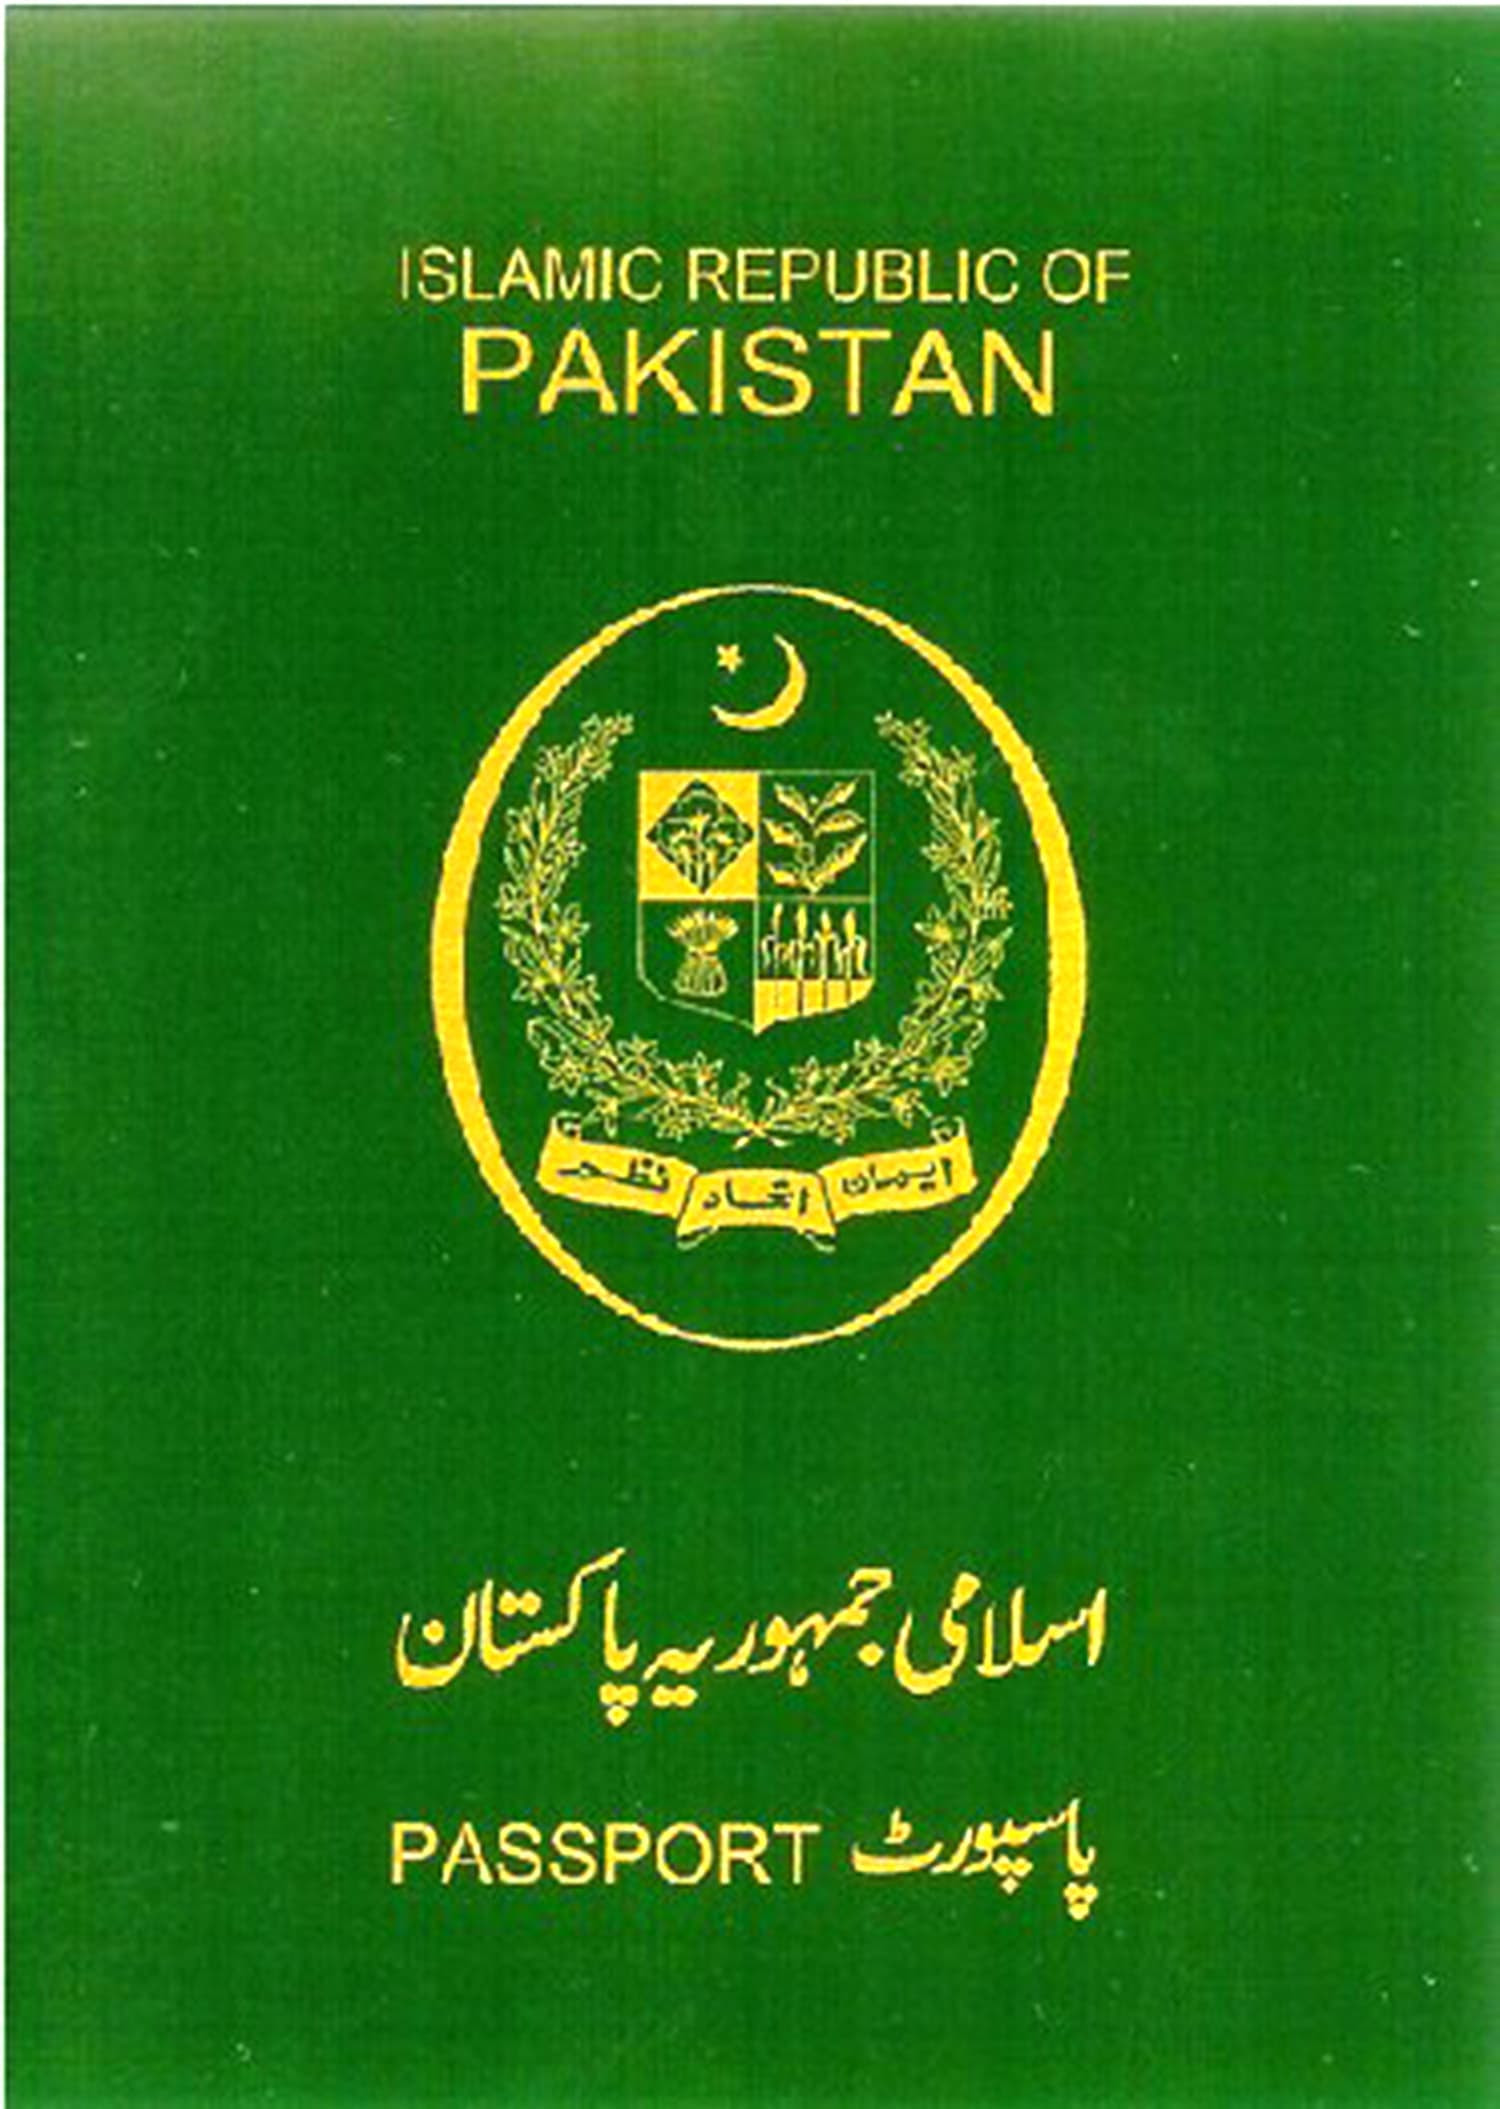 The Pakistani passport today